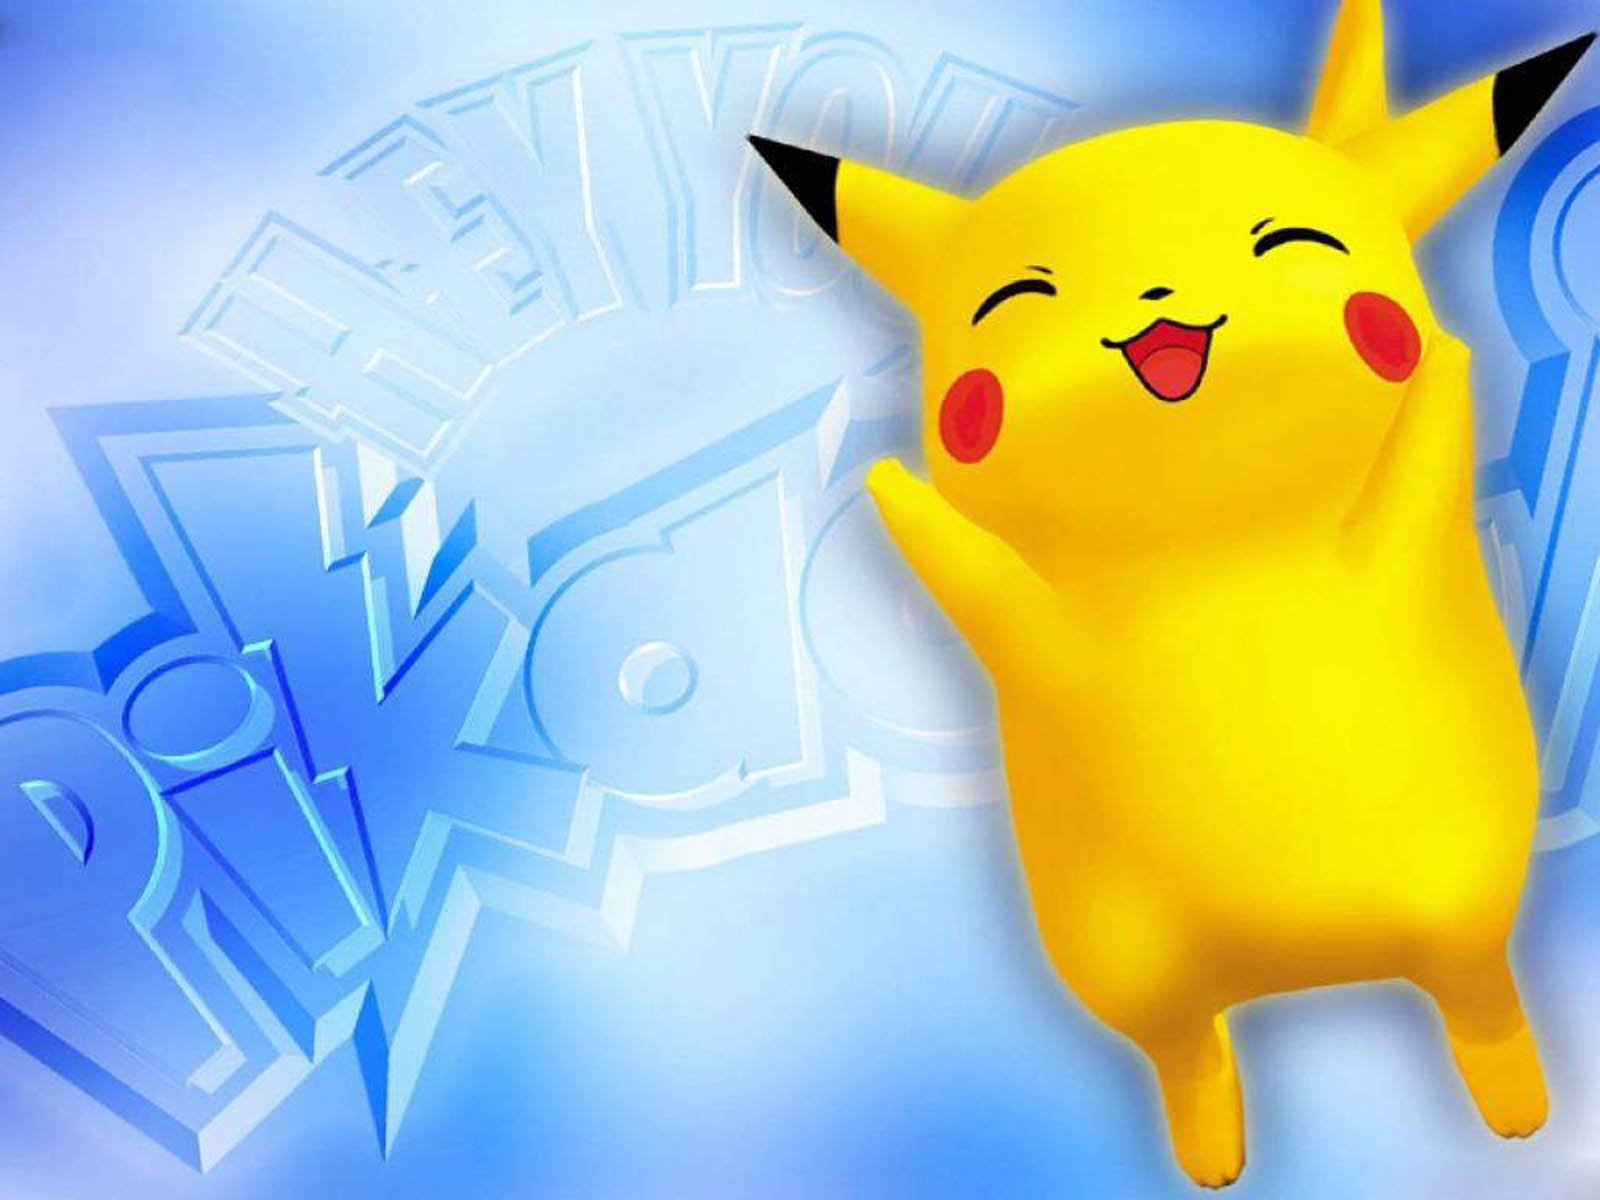 Pikachu Pokemon picture for wallpaper